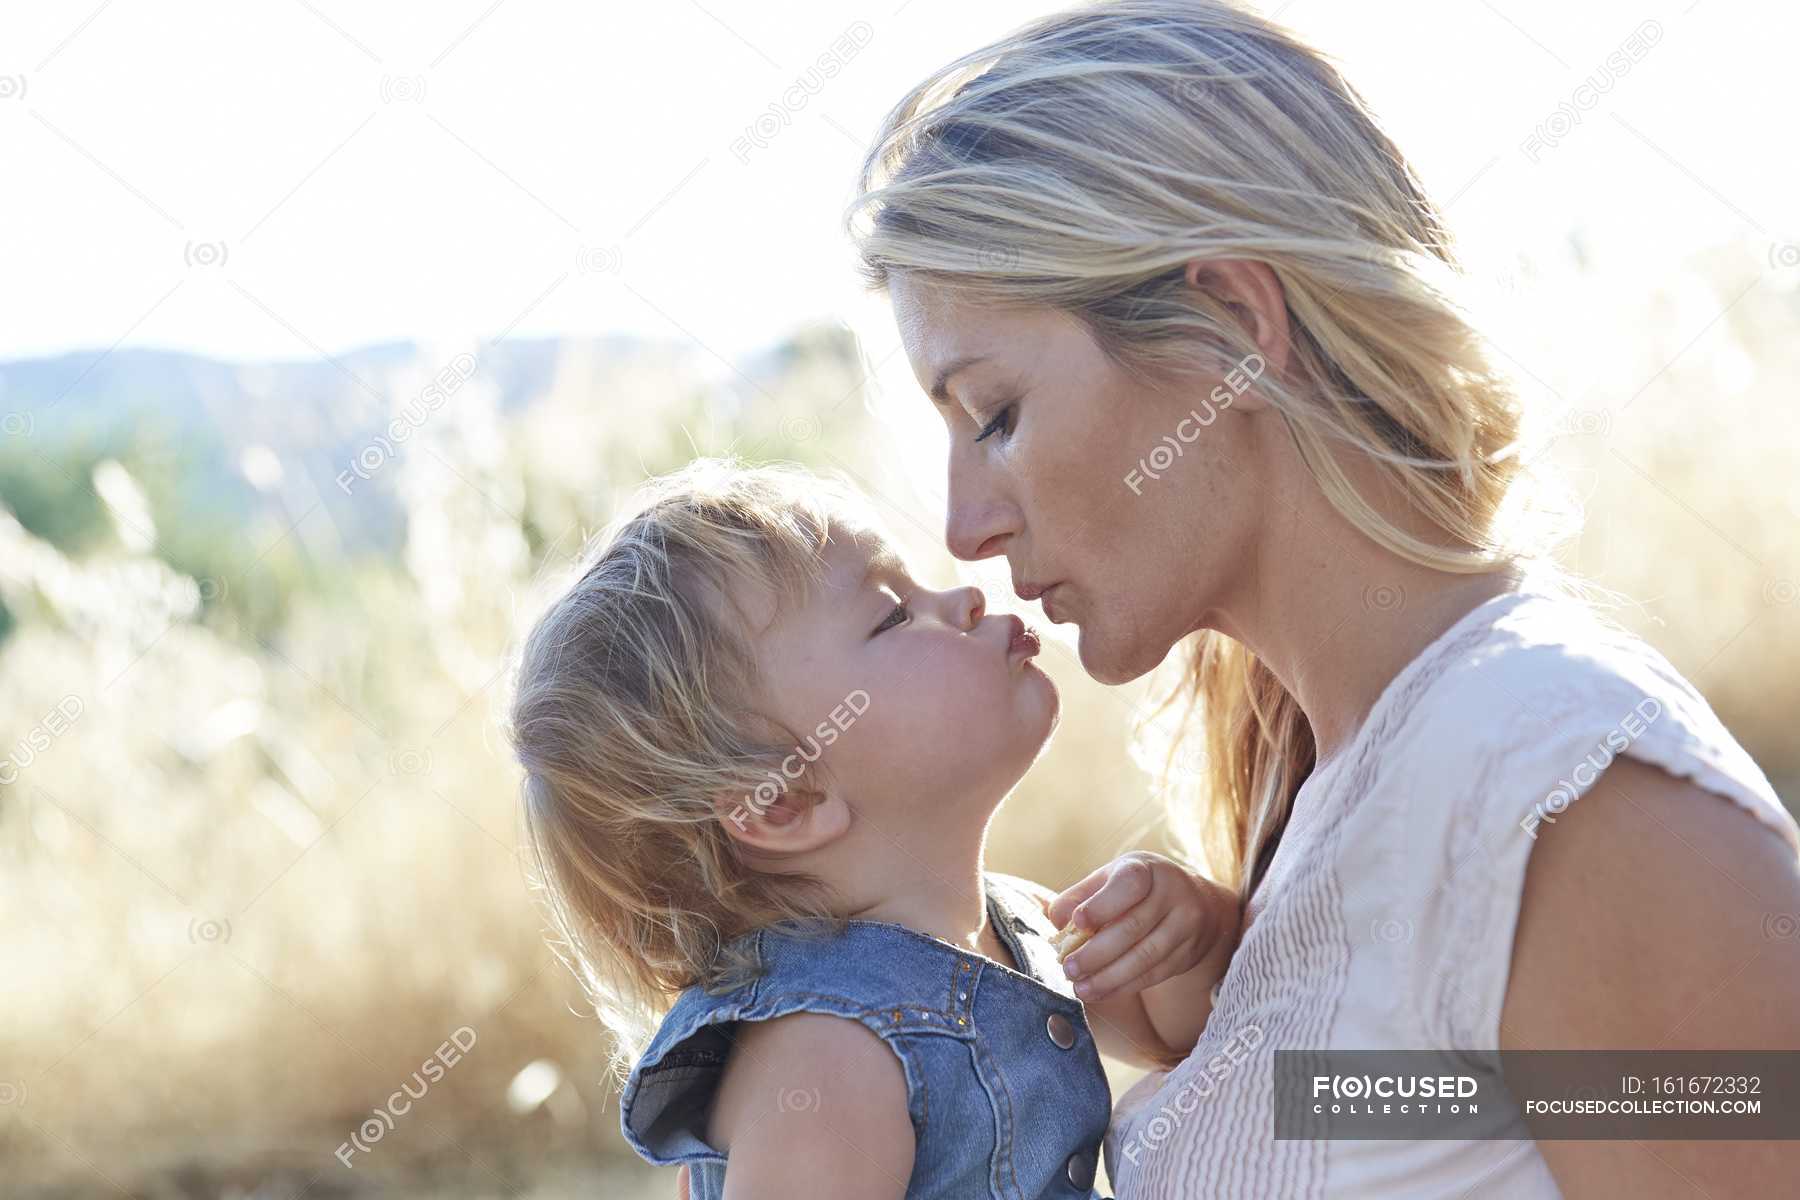 Мама и дочка целуются. Мама целует дочь. Мама целует малыша. Глубокий поцелуй мамы и Дочки. Мама целует Ярославу.